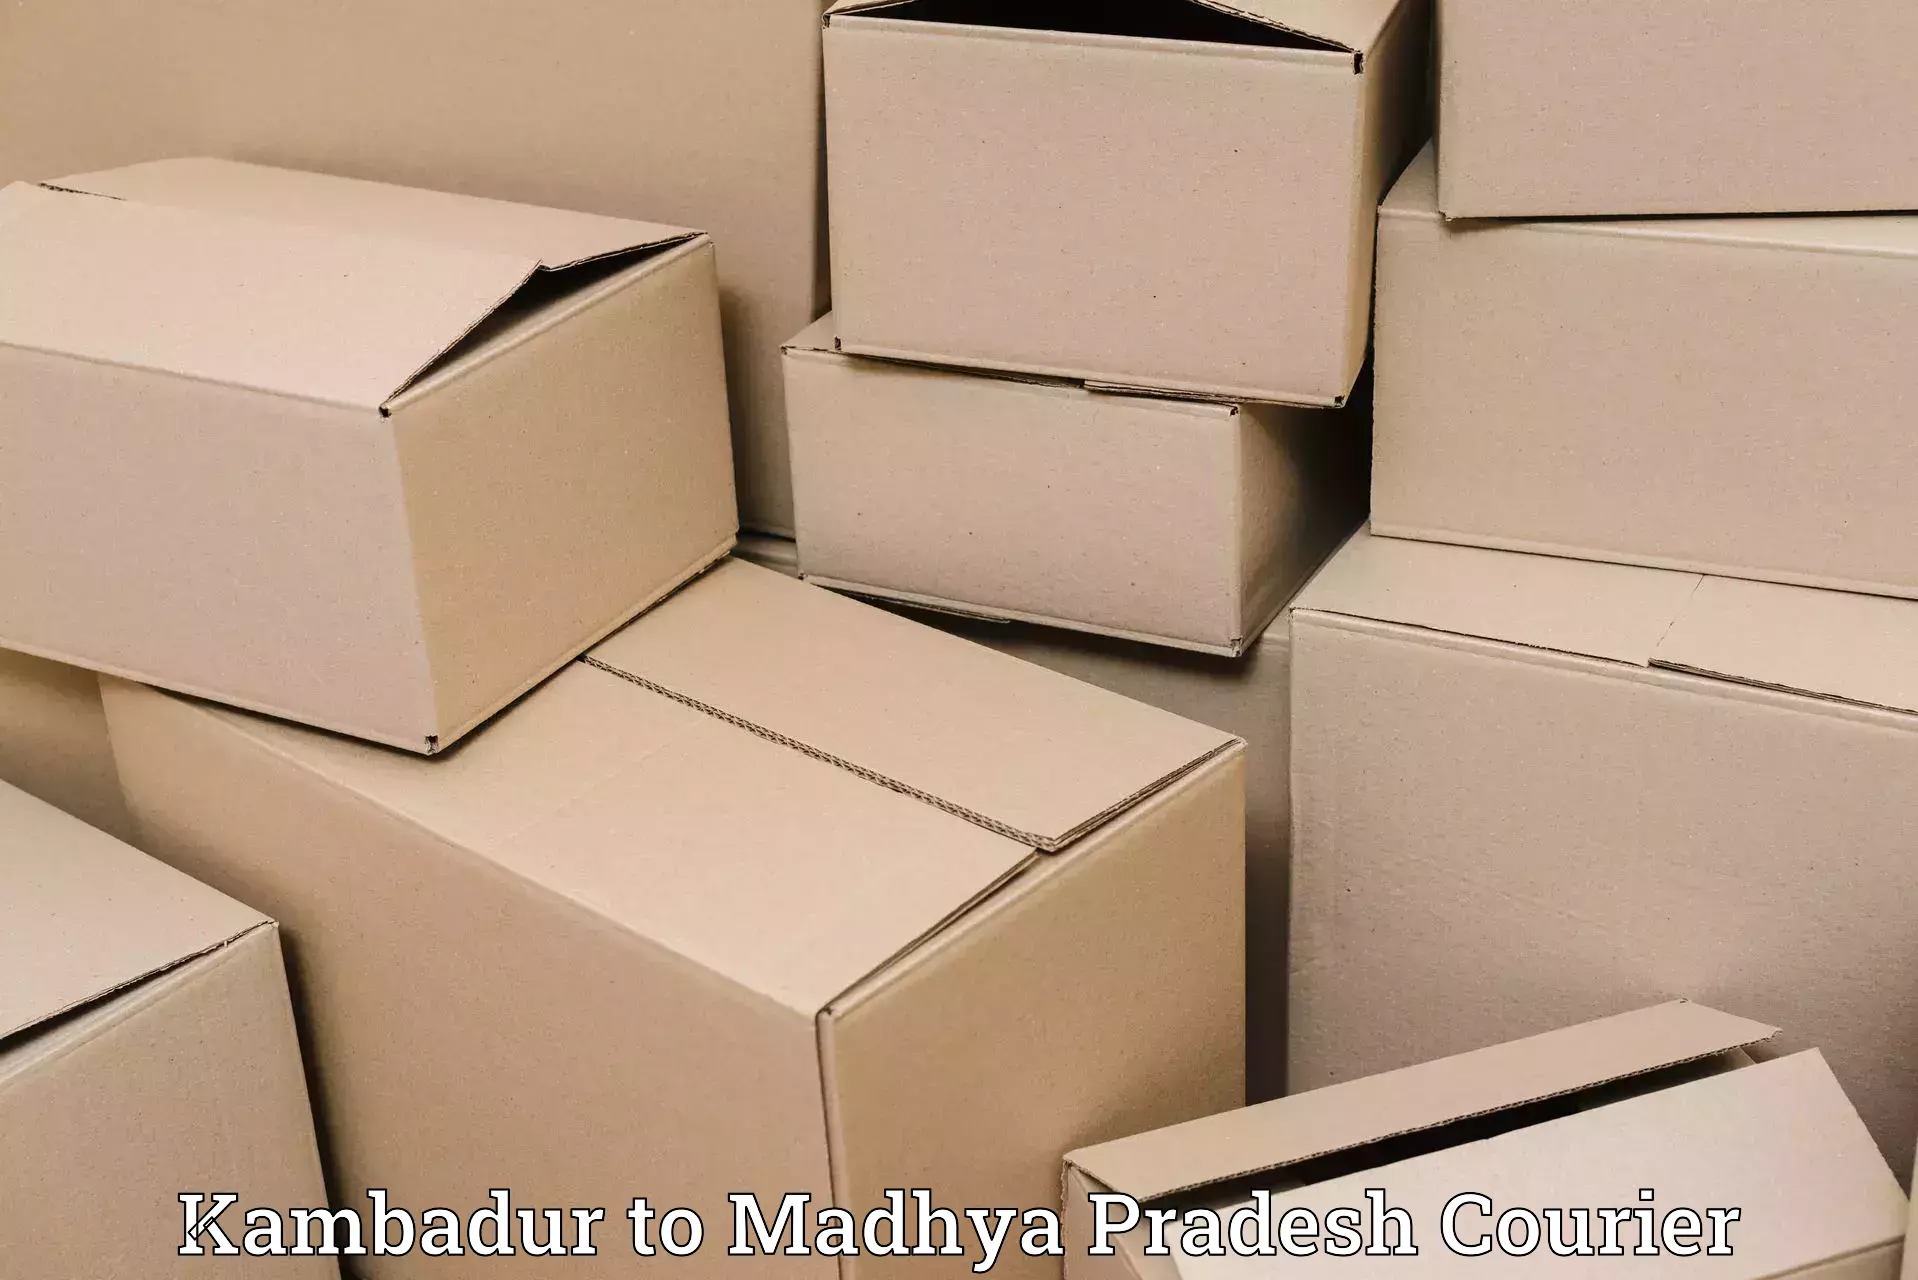 24-hour delivery options Kambadur to Madhya Pradesh